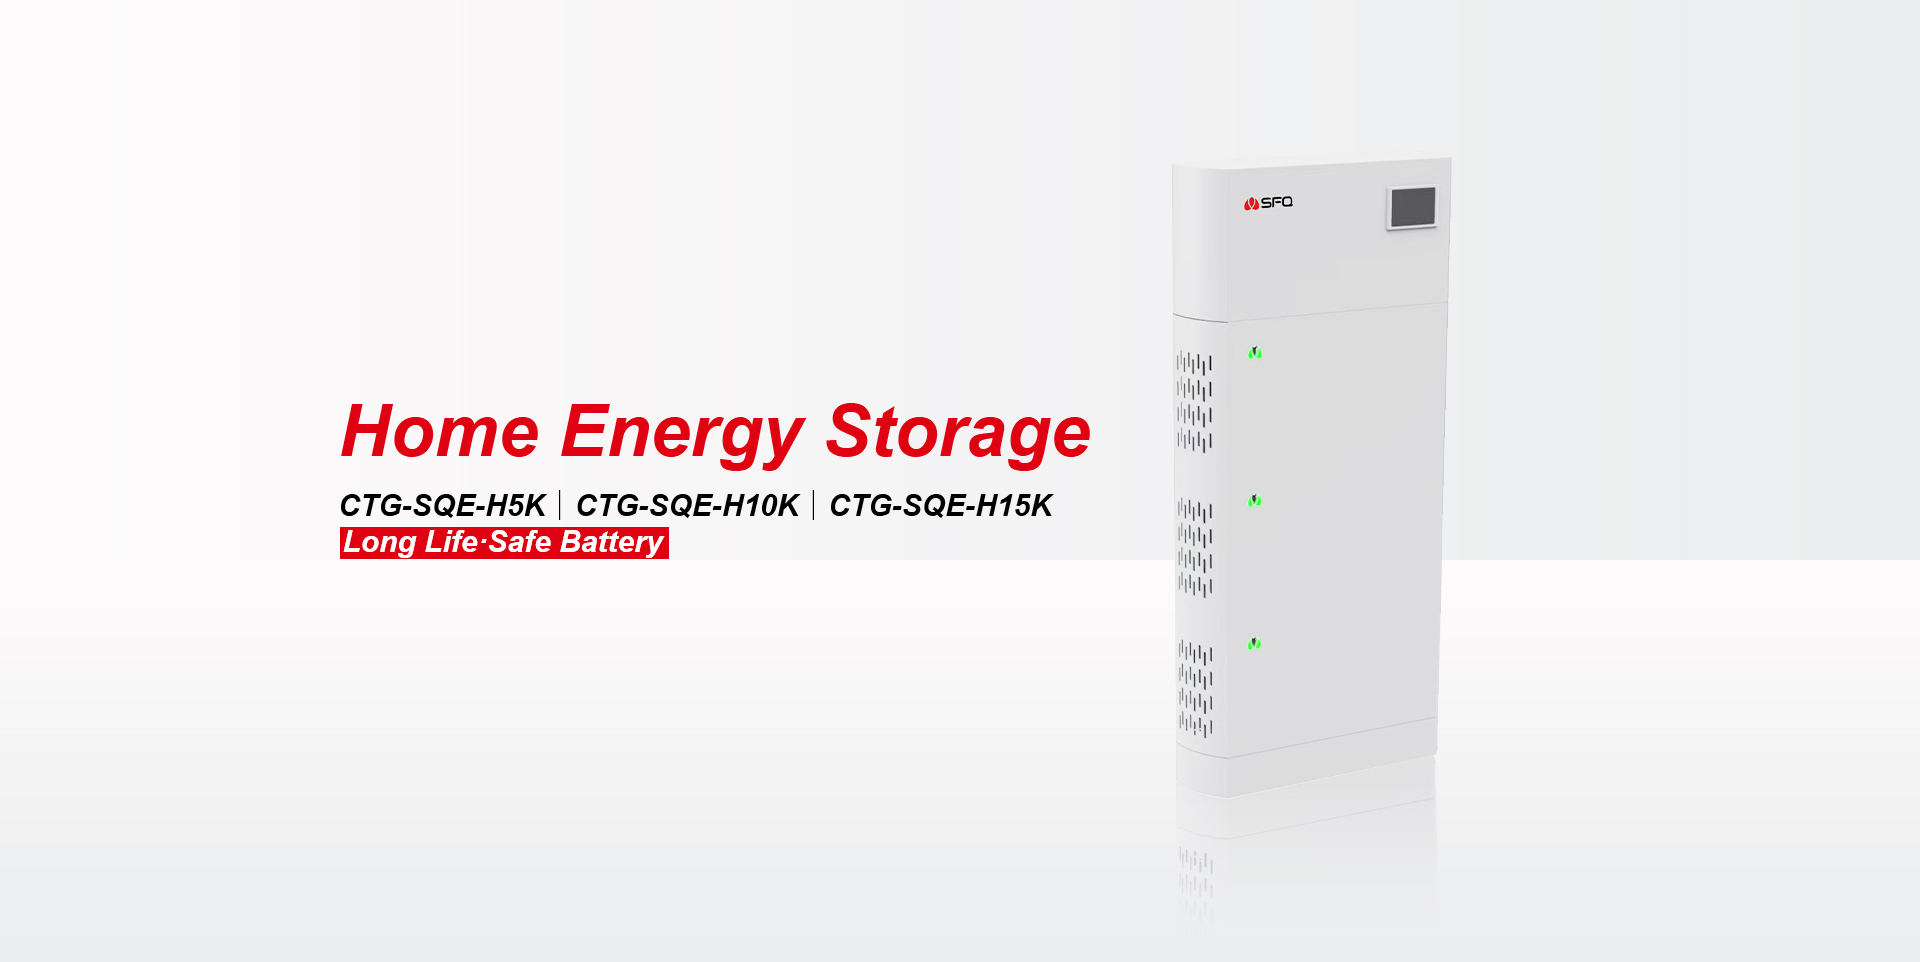 Home Energy Storage